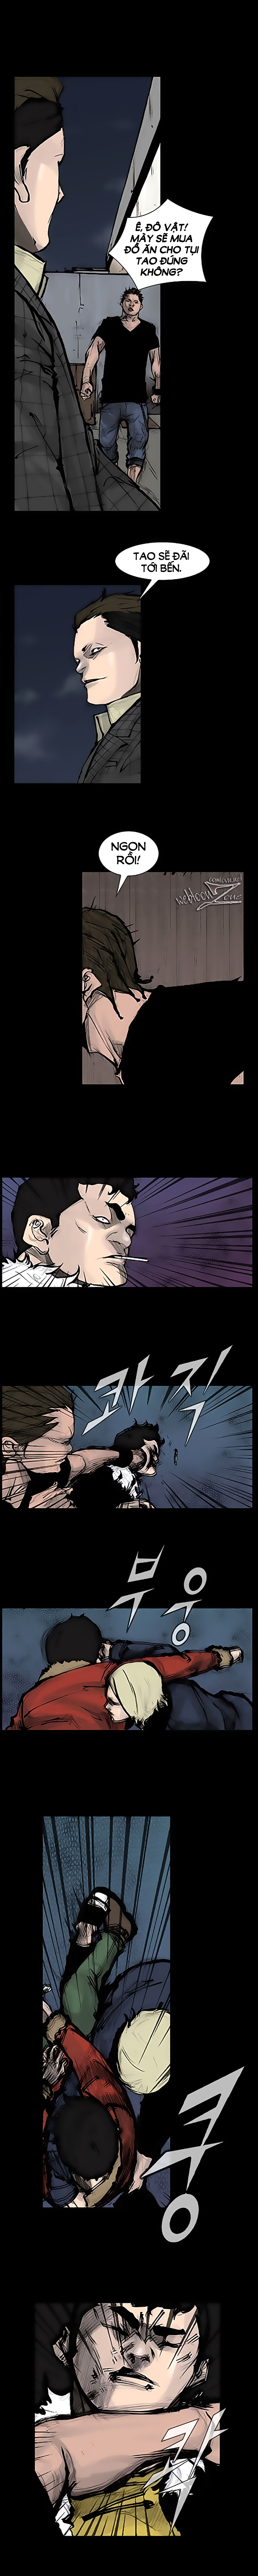 Dokgo Rewind kỳ 21 trang 8